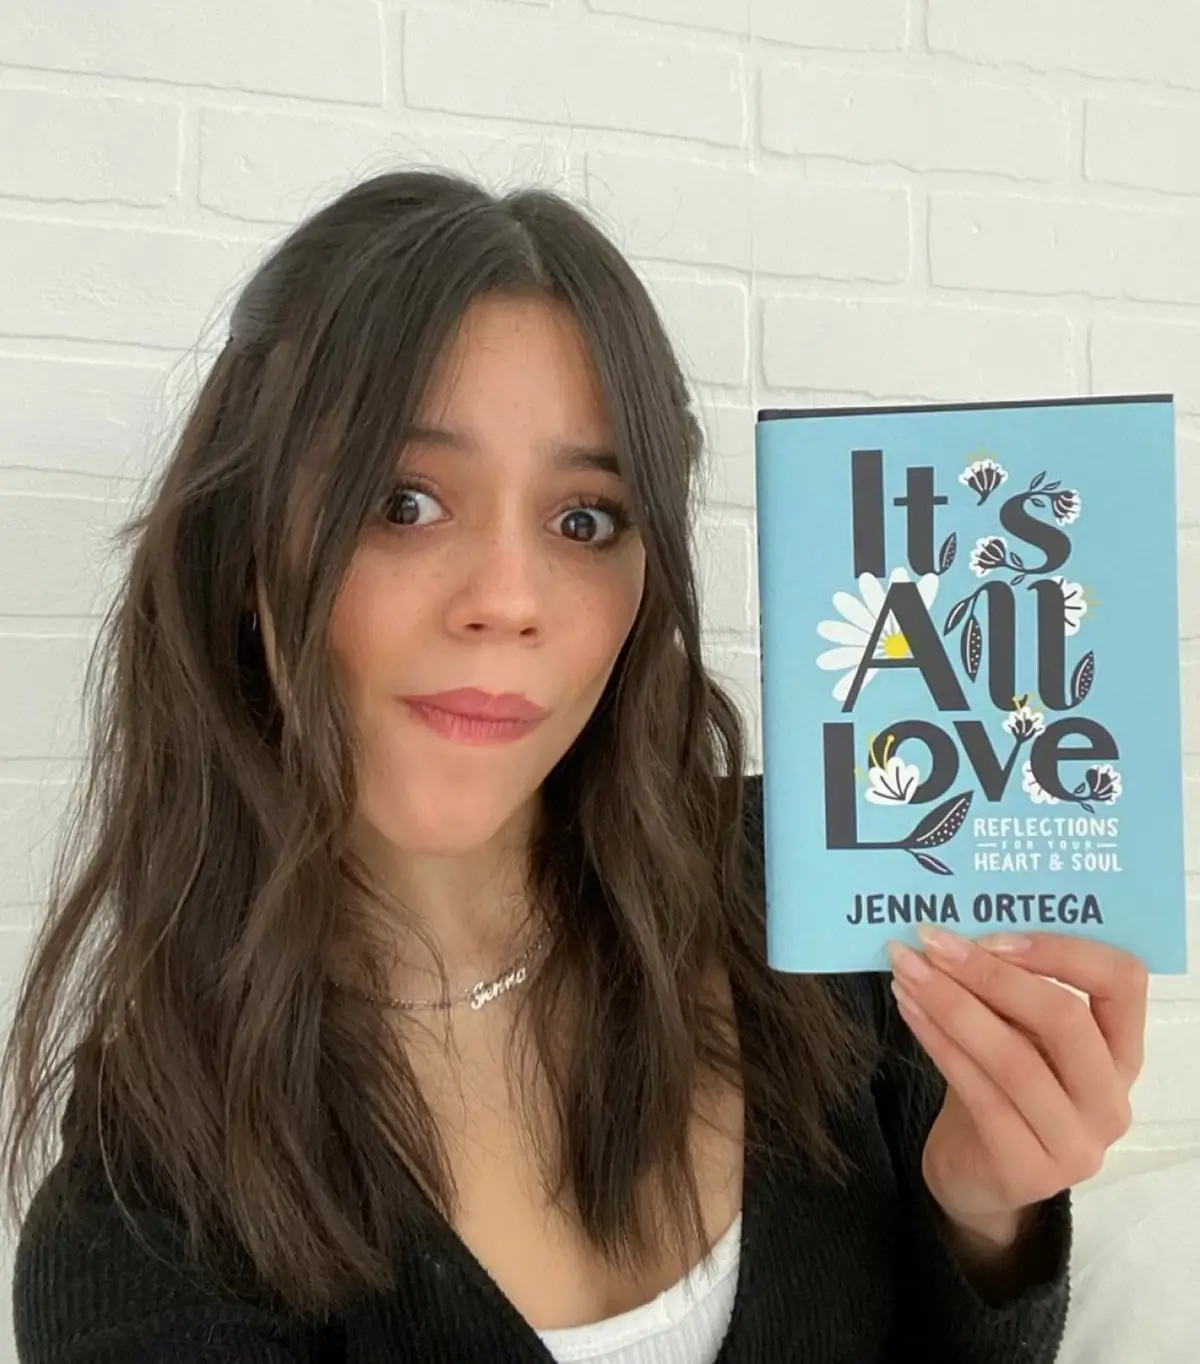 Jenna Ortega holding her book, "It's All Love."